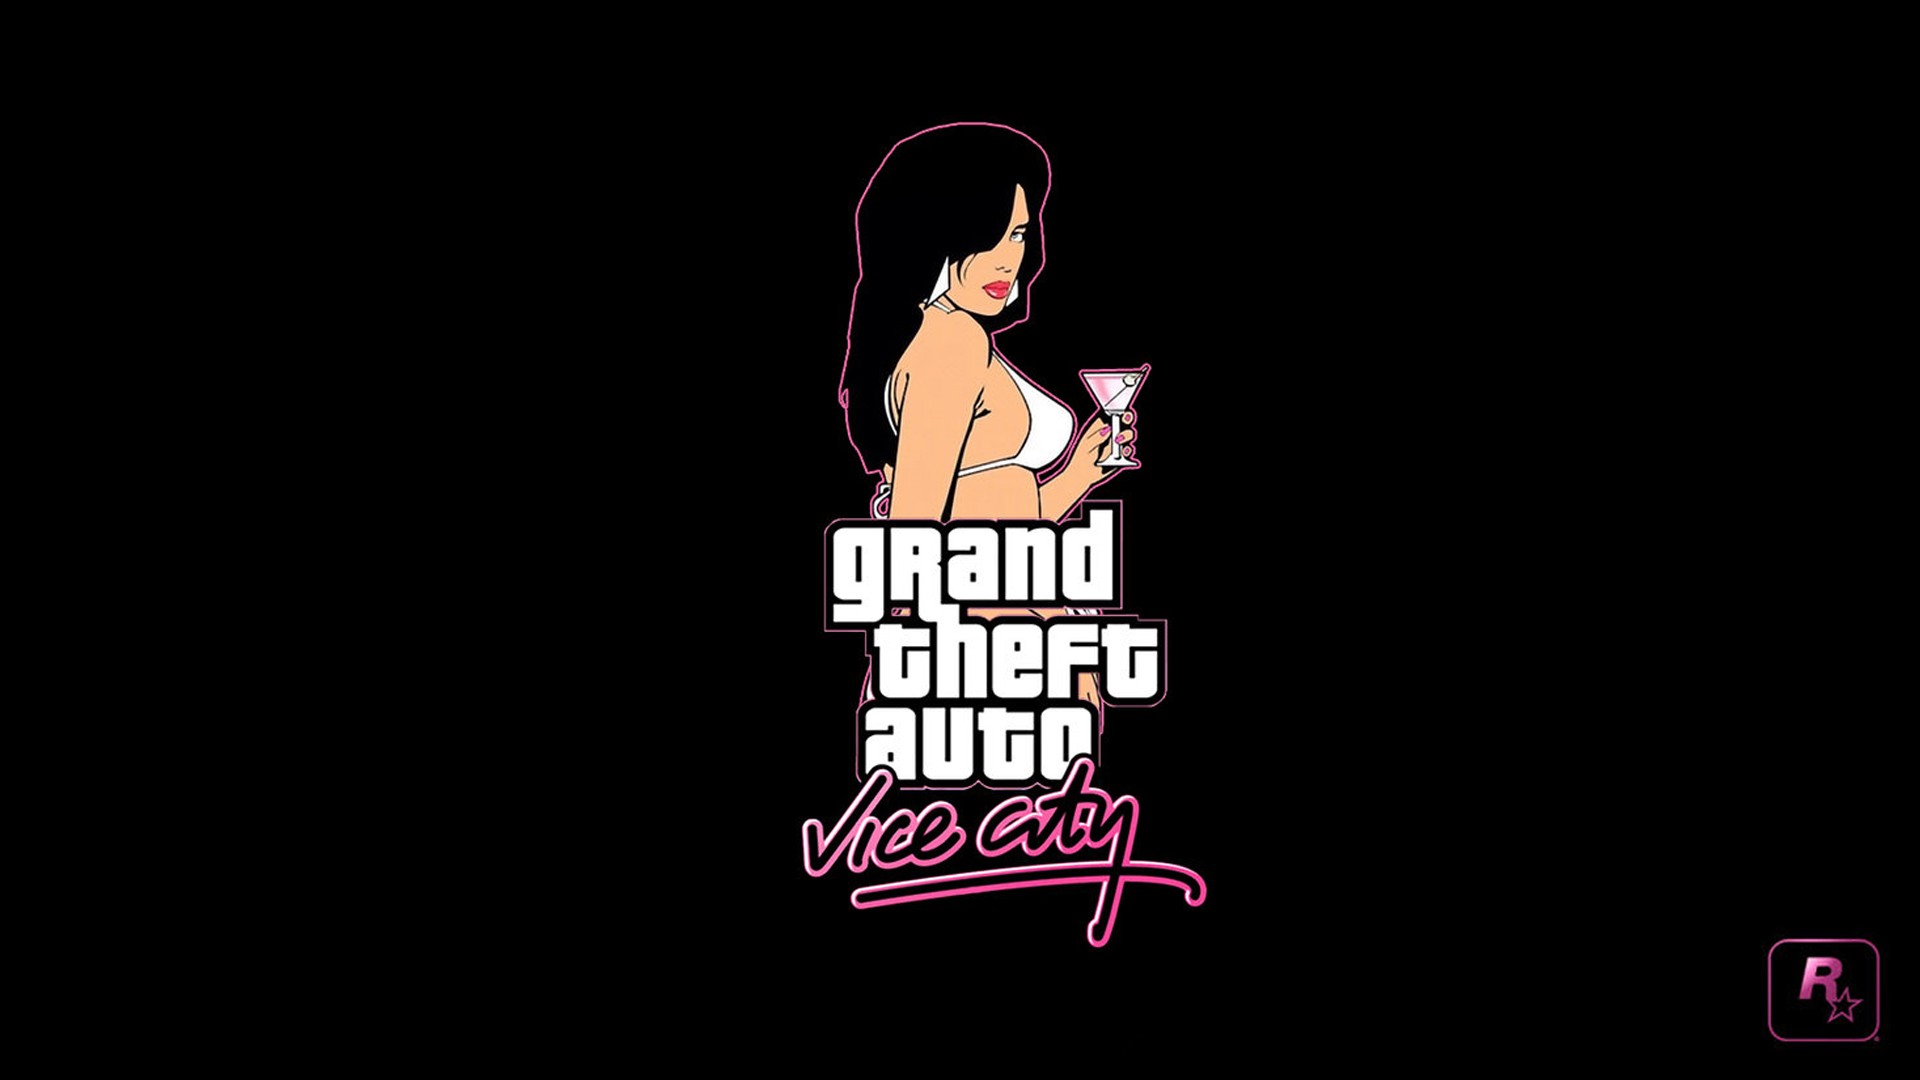 Grand Theft Auto Vice City, Rockstar Games, PlayStation 2, Video Games Wallpaper